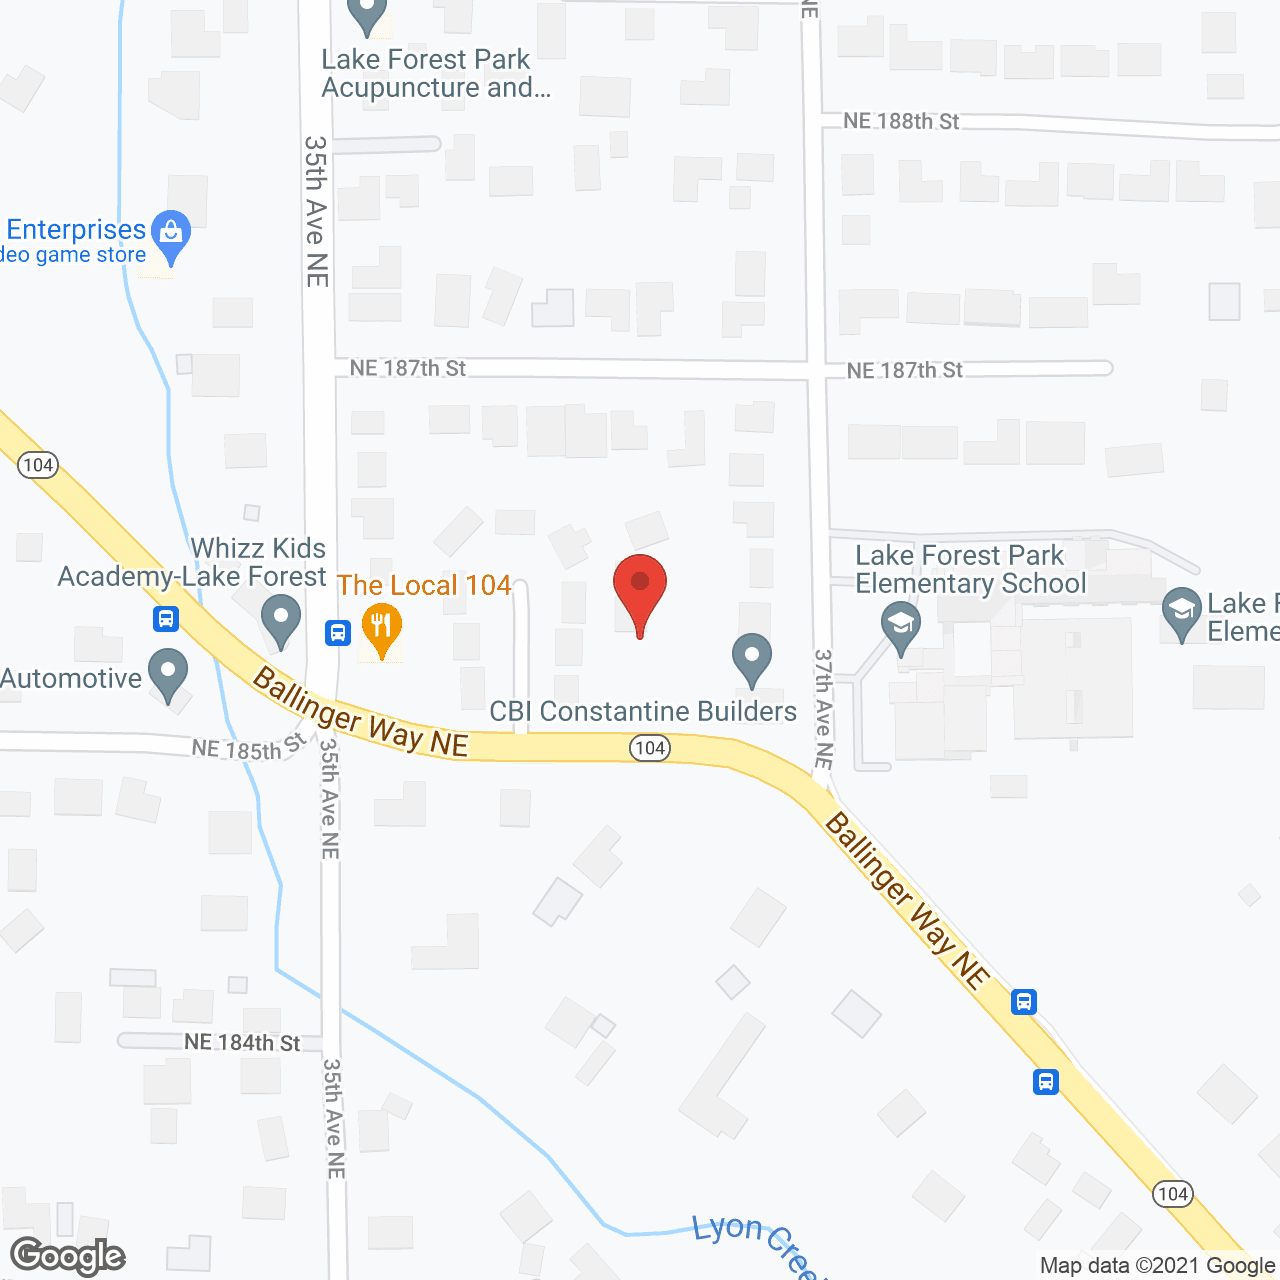 Anderson AFH II/Laurel Cove II -DUPLICATE in google map